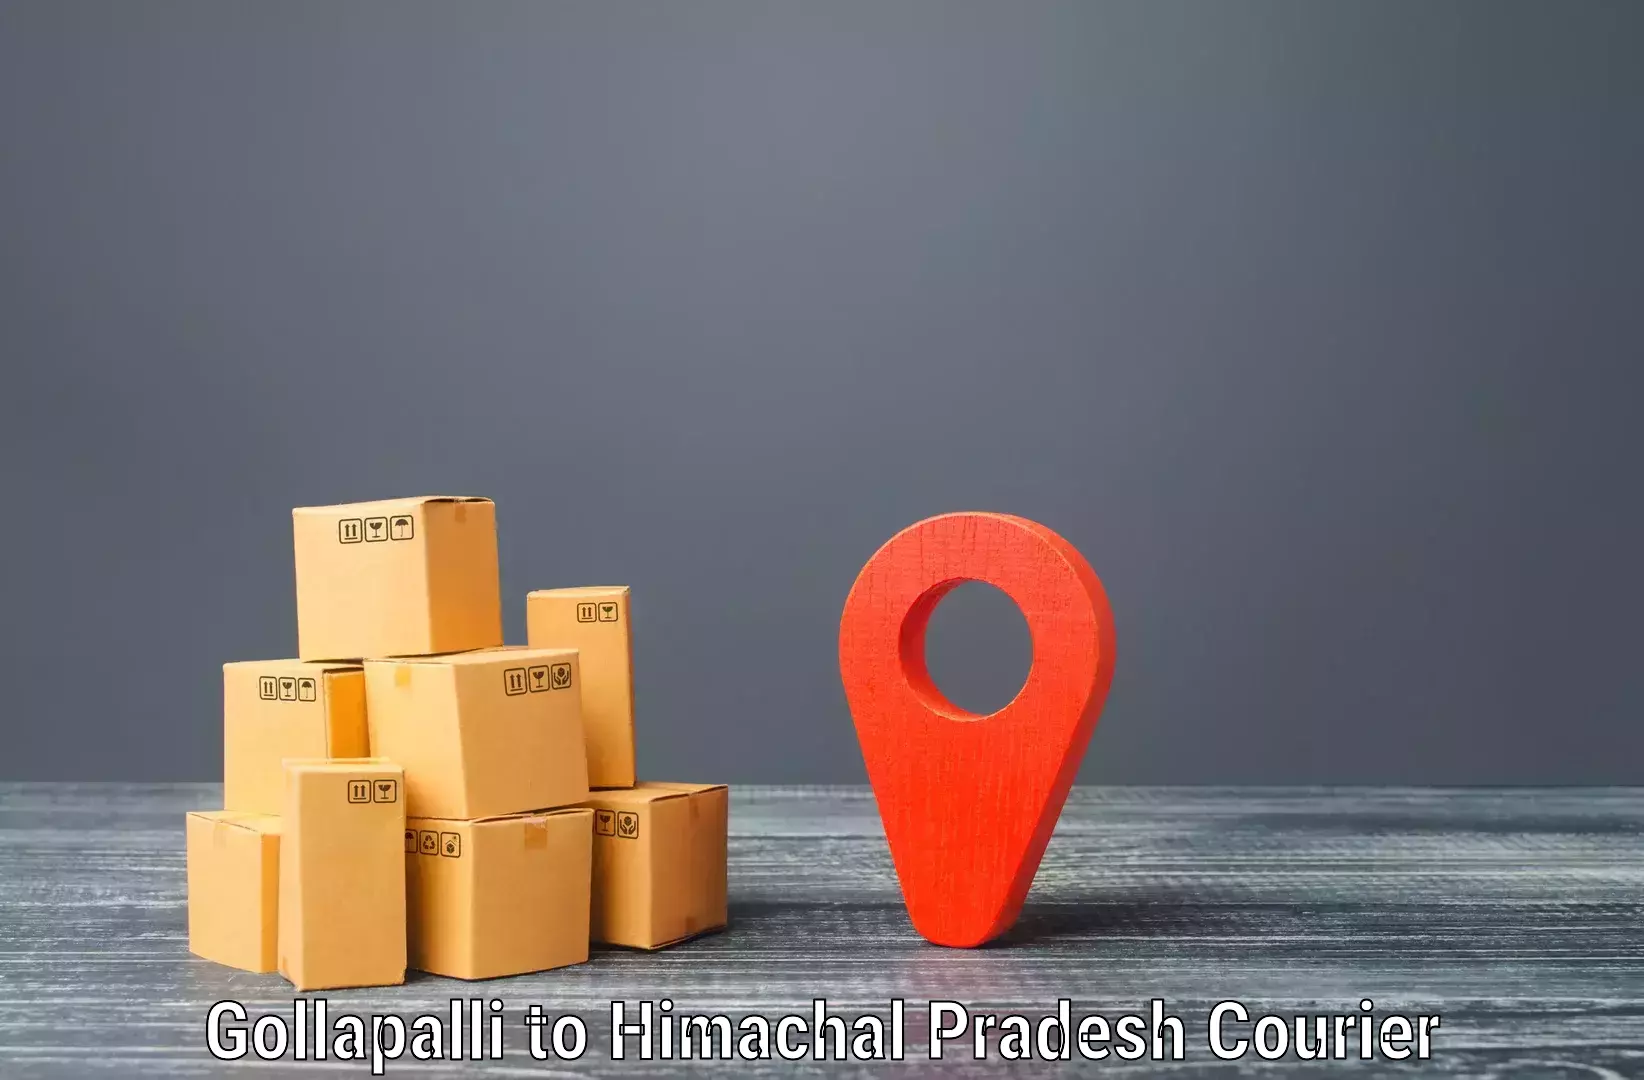 Flexible delivery scheduling Gollapalli to Kalol Jhandutta